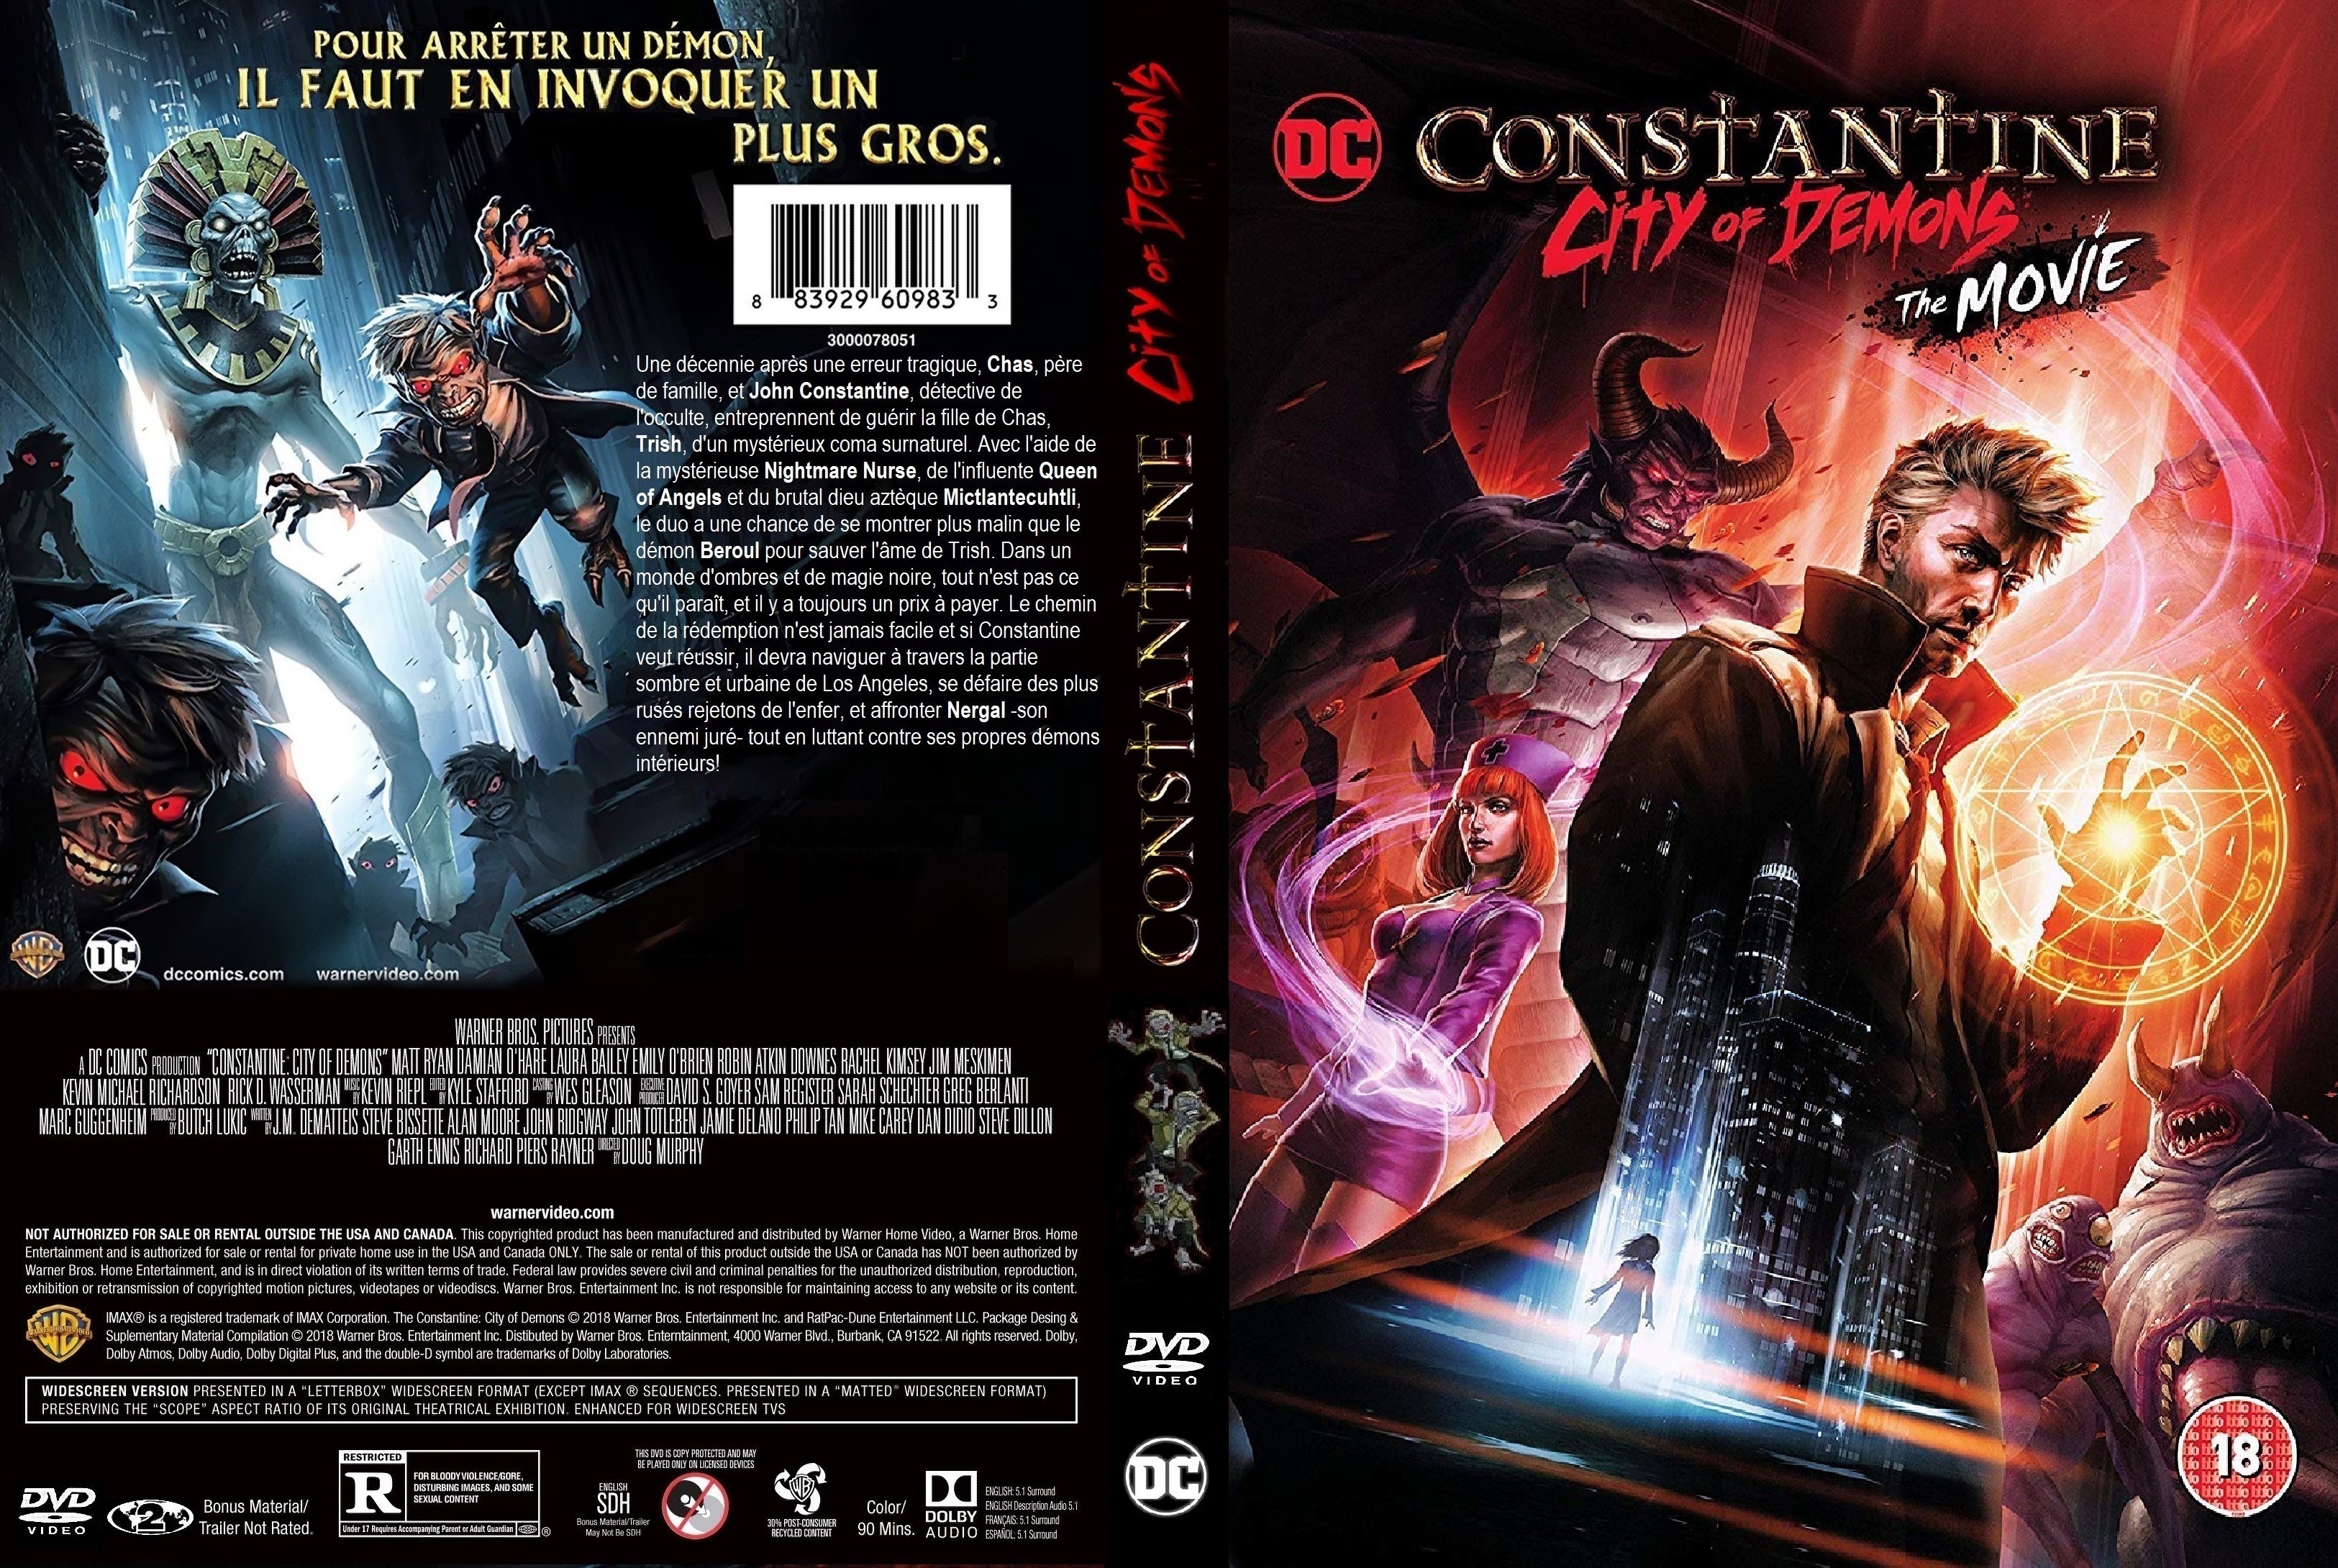 Jaquette DVD Constantine City of Demons custom v2